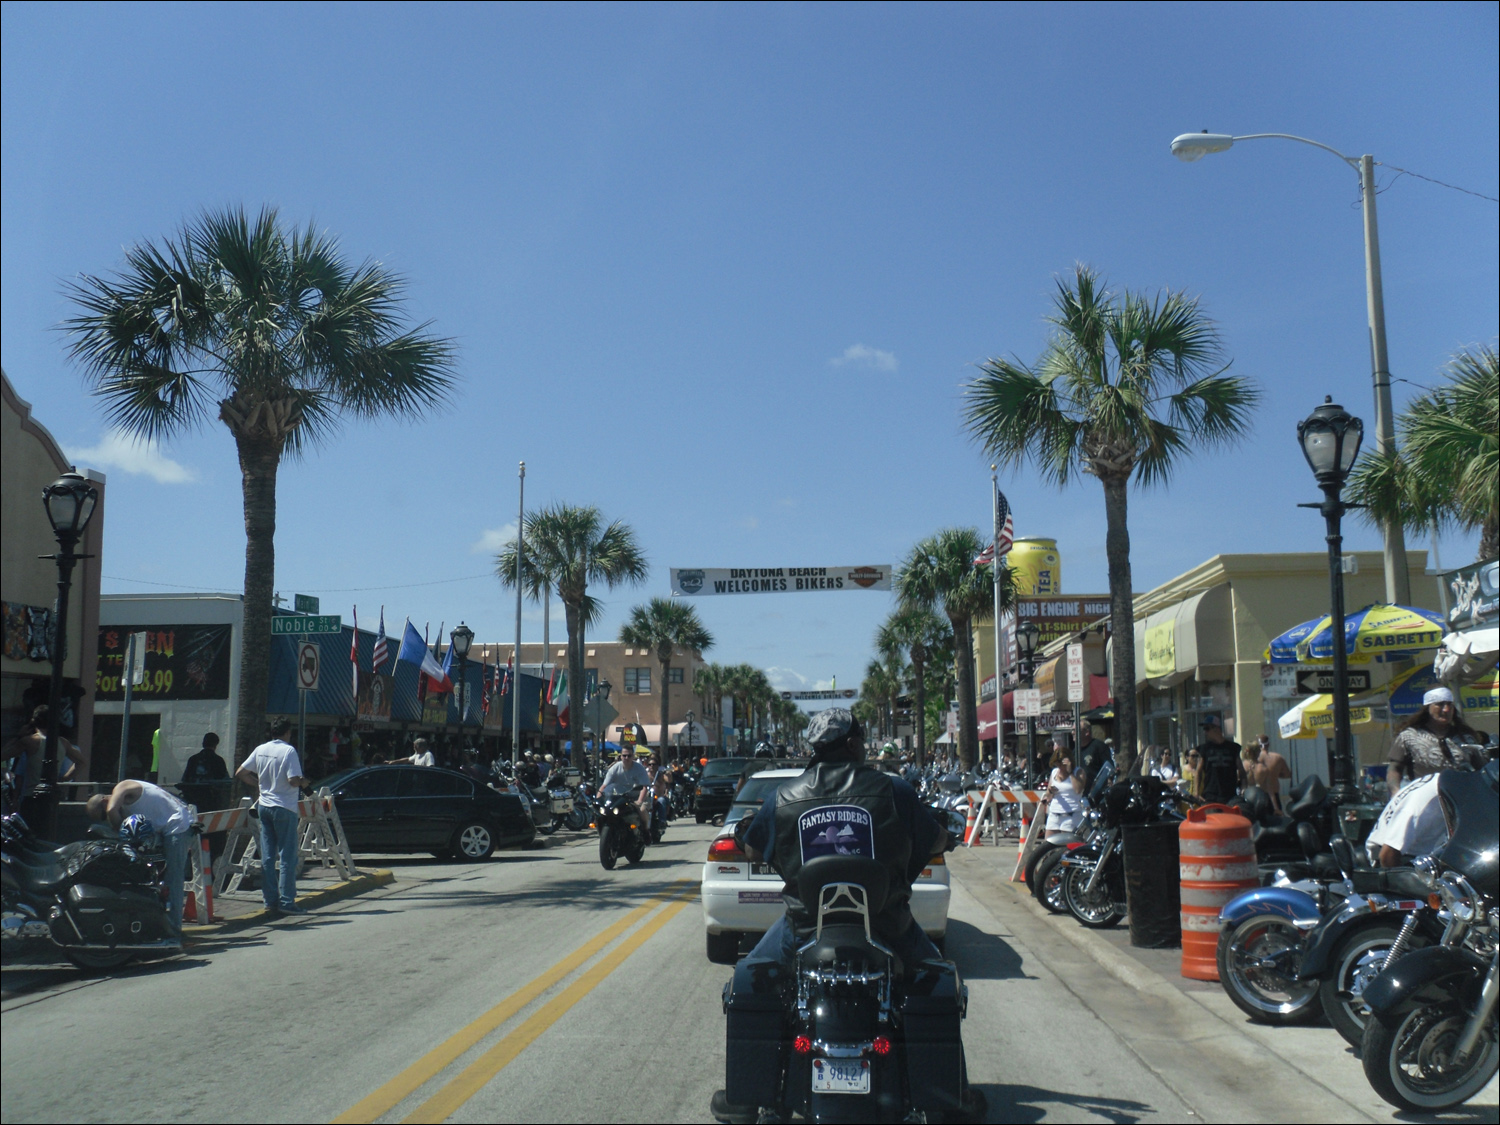 Final day of Biker Week at Daytona Beach